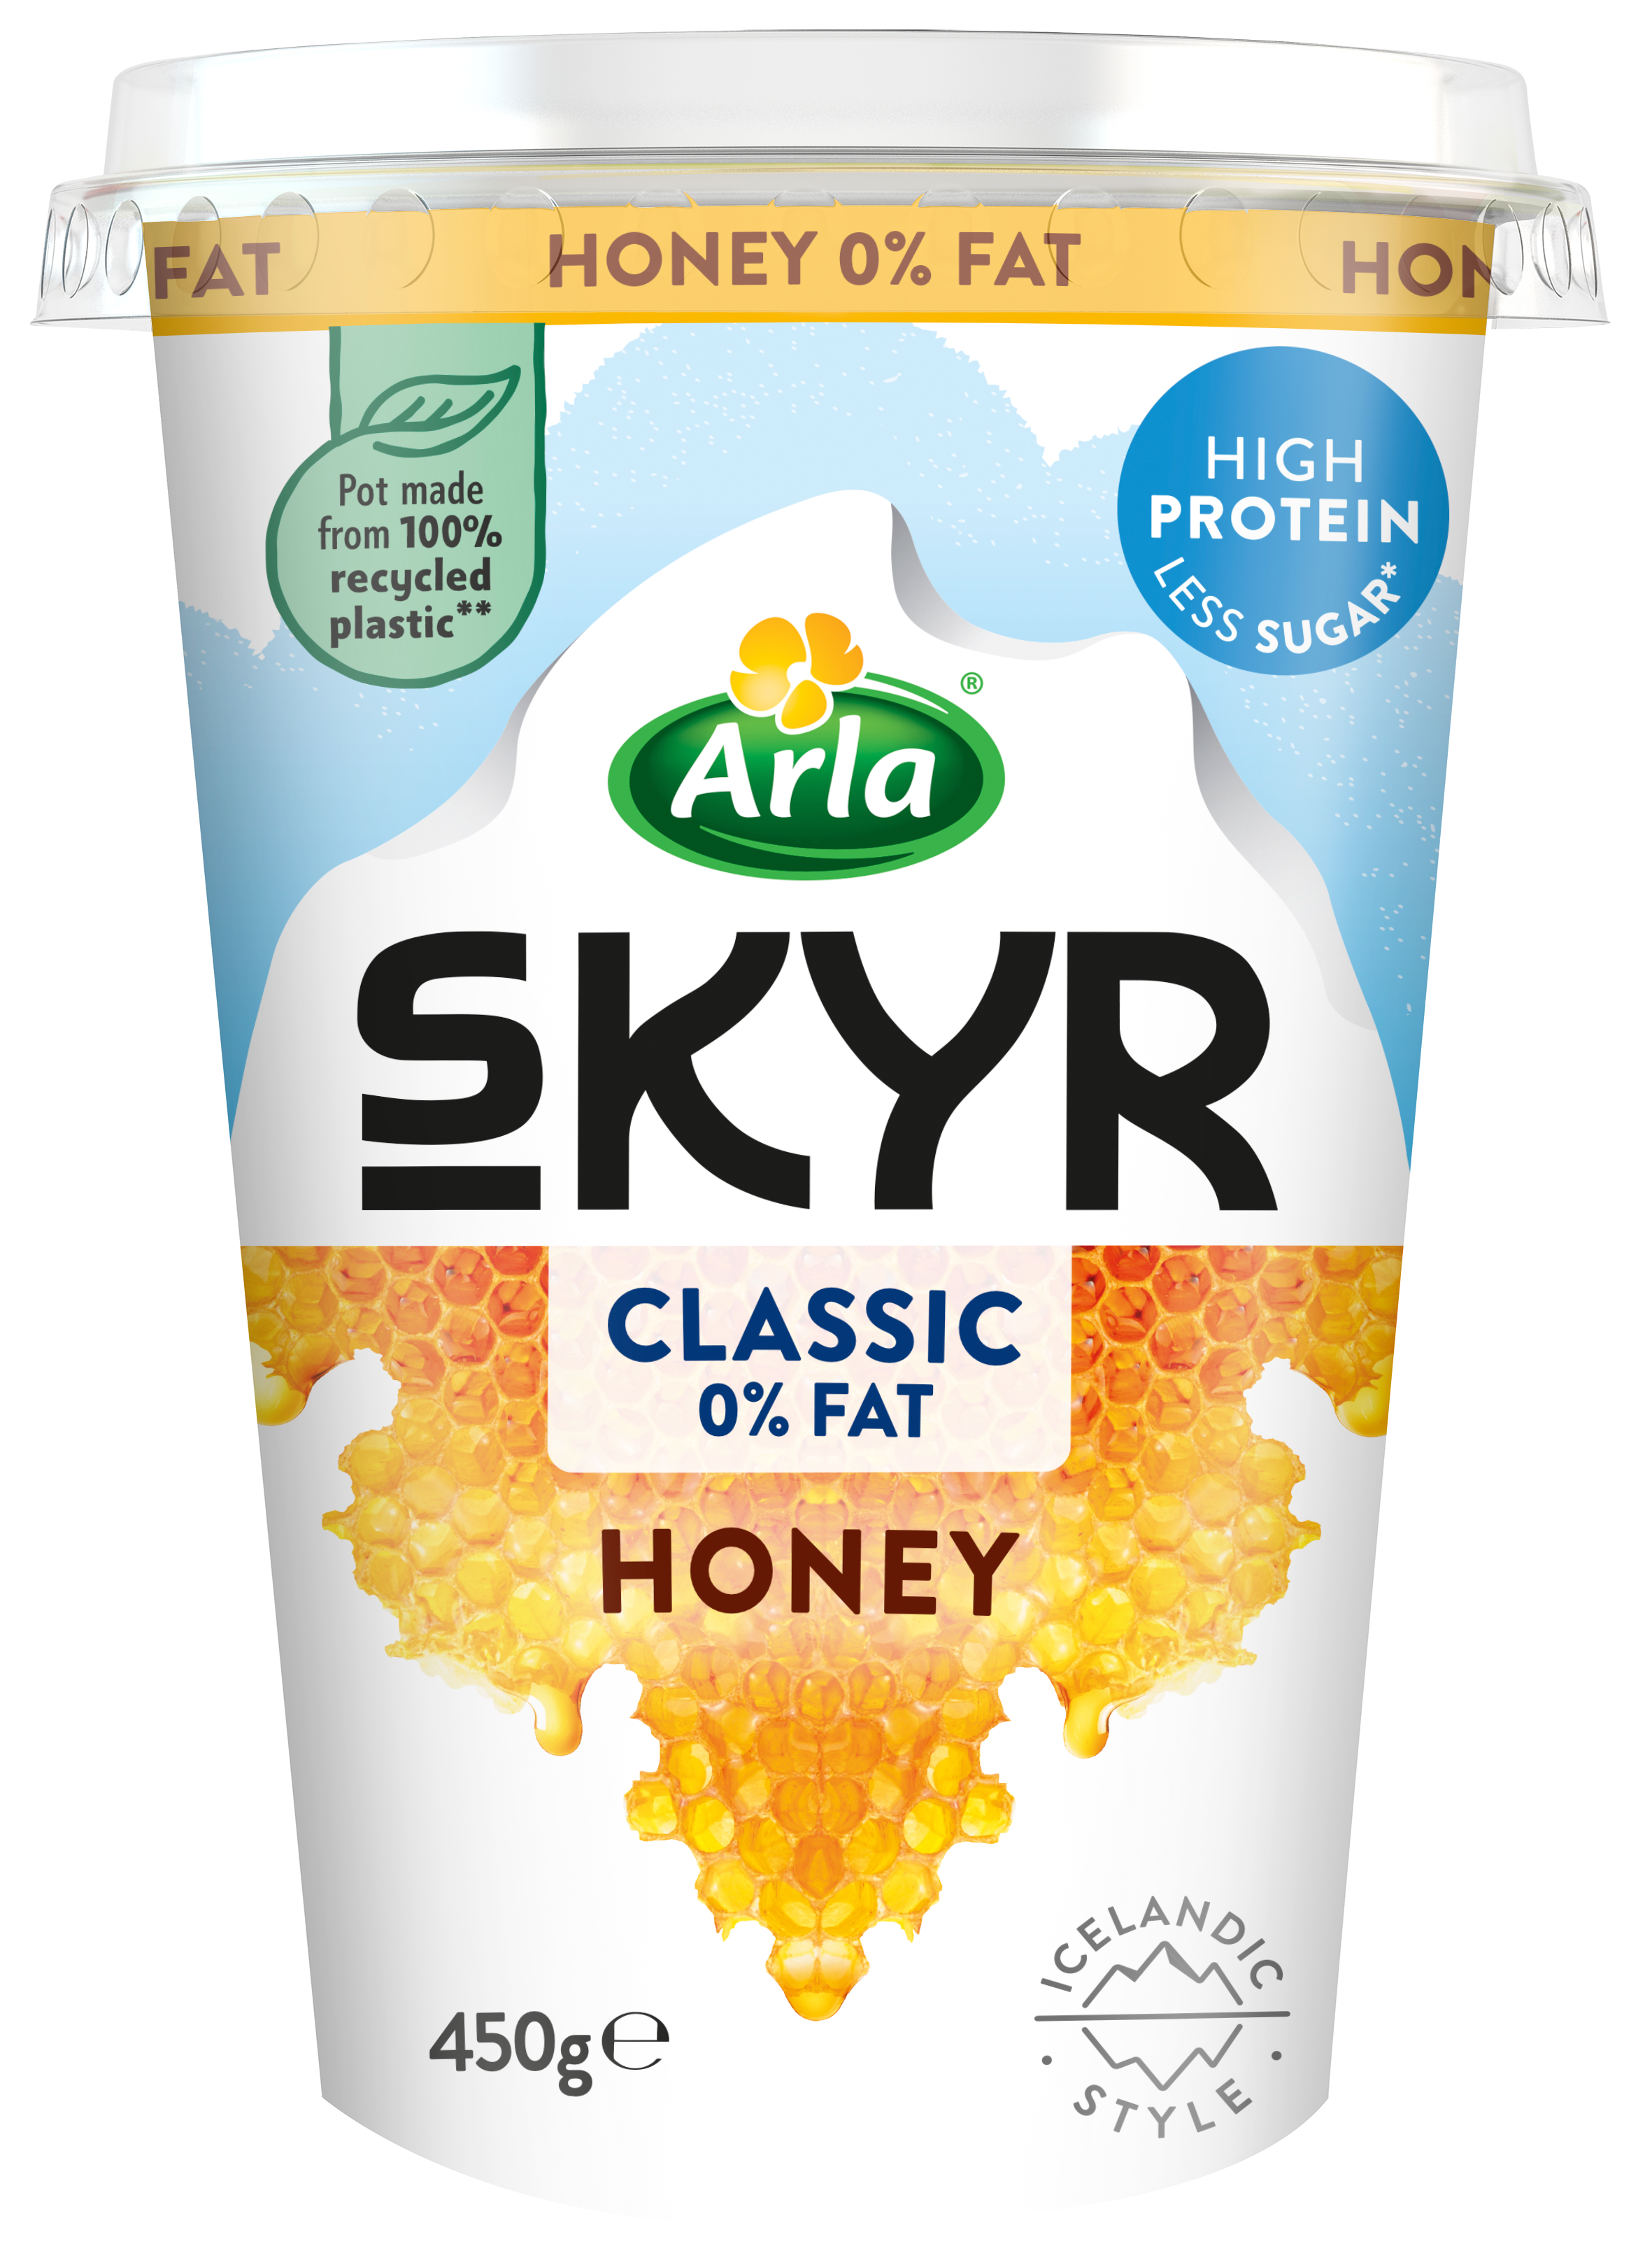 Arla Skyr Honey 450g (Discontinued)